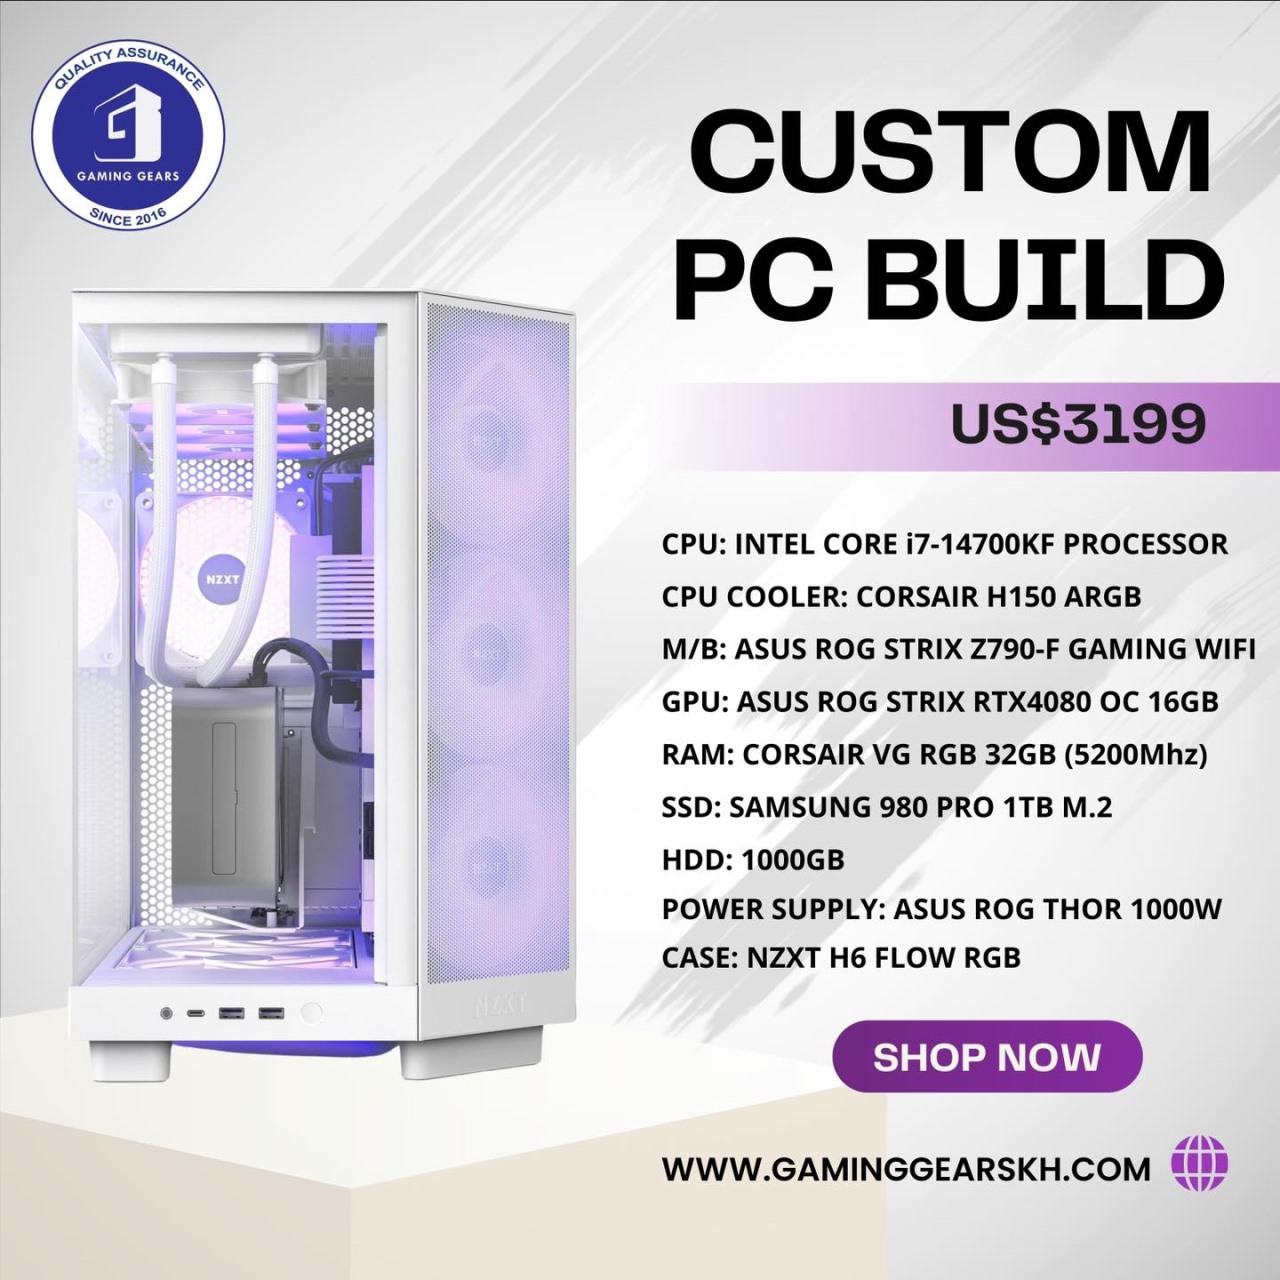 CUSTOM PC BUILD GG025